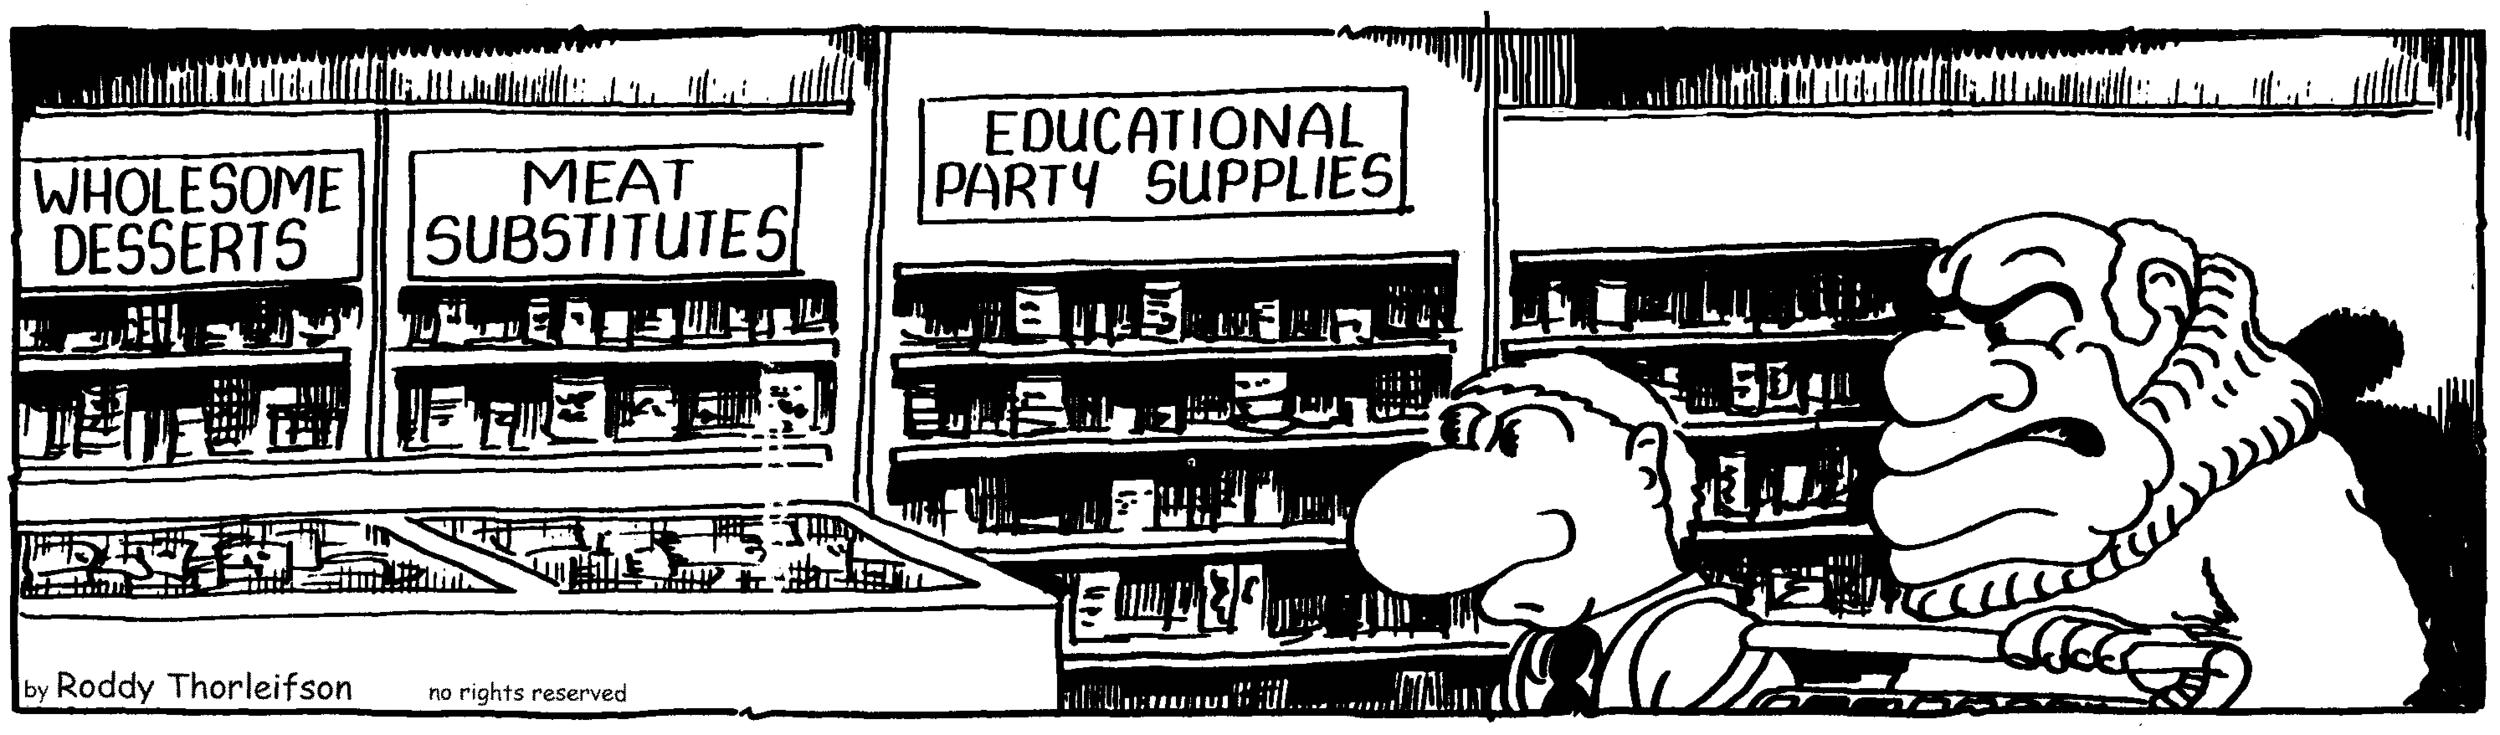 free cartoon education educating teaching party supplies and educational party supplies